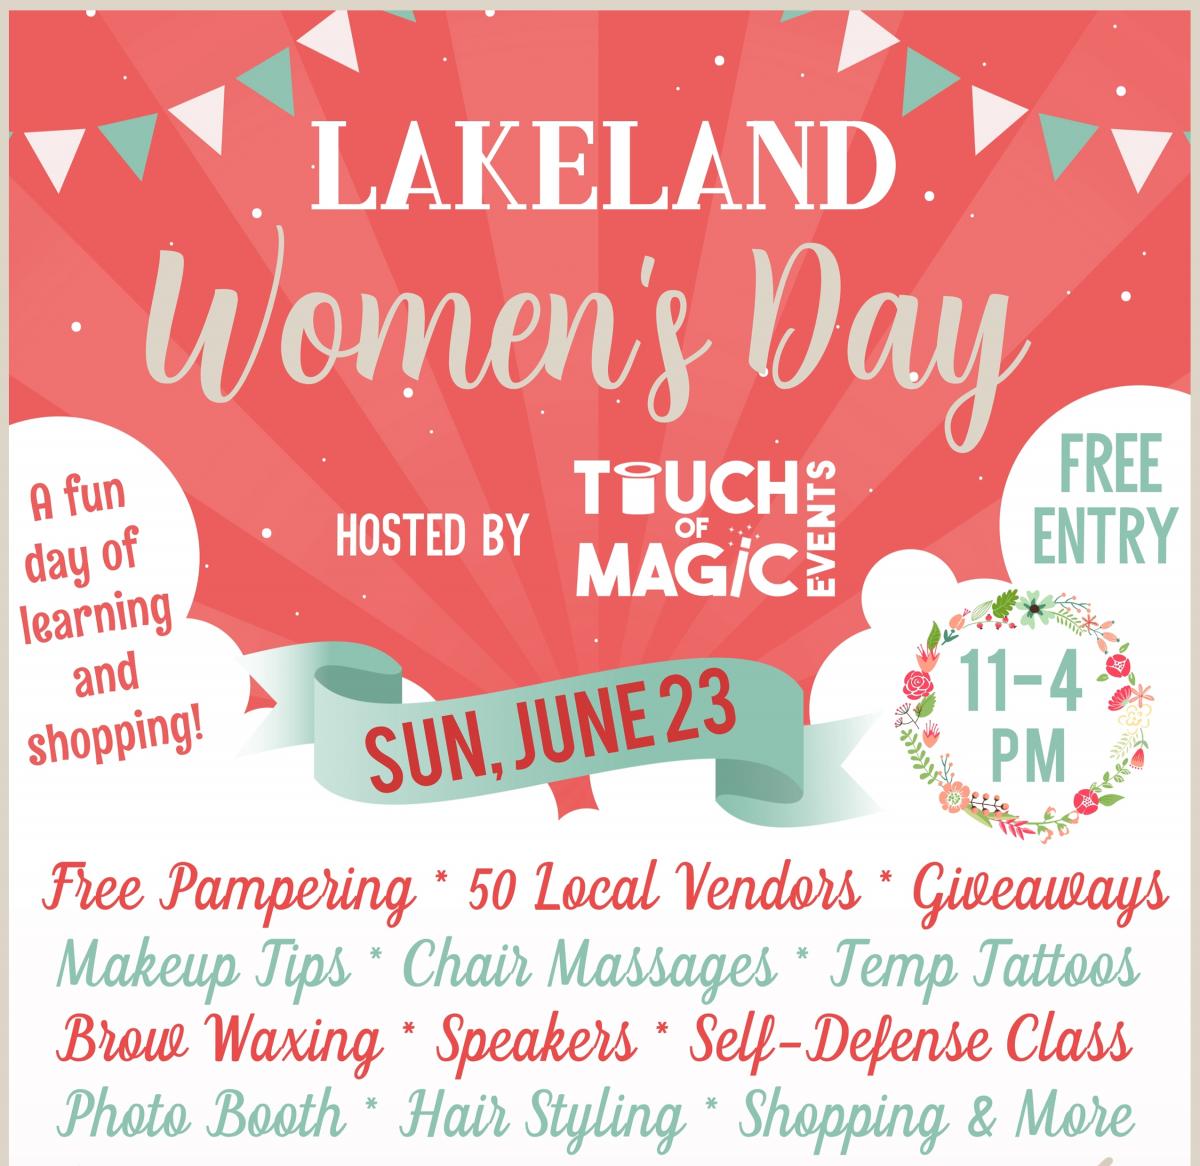 Lakeland Women's Day cover image